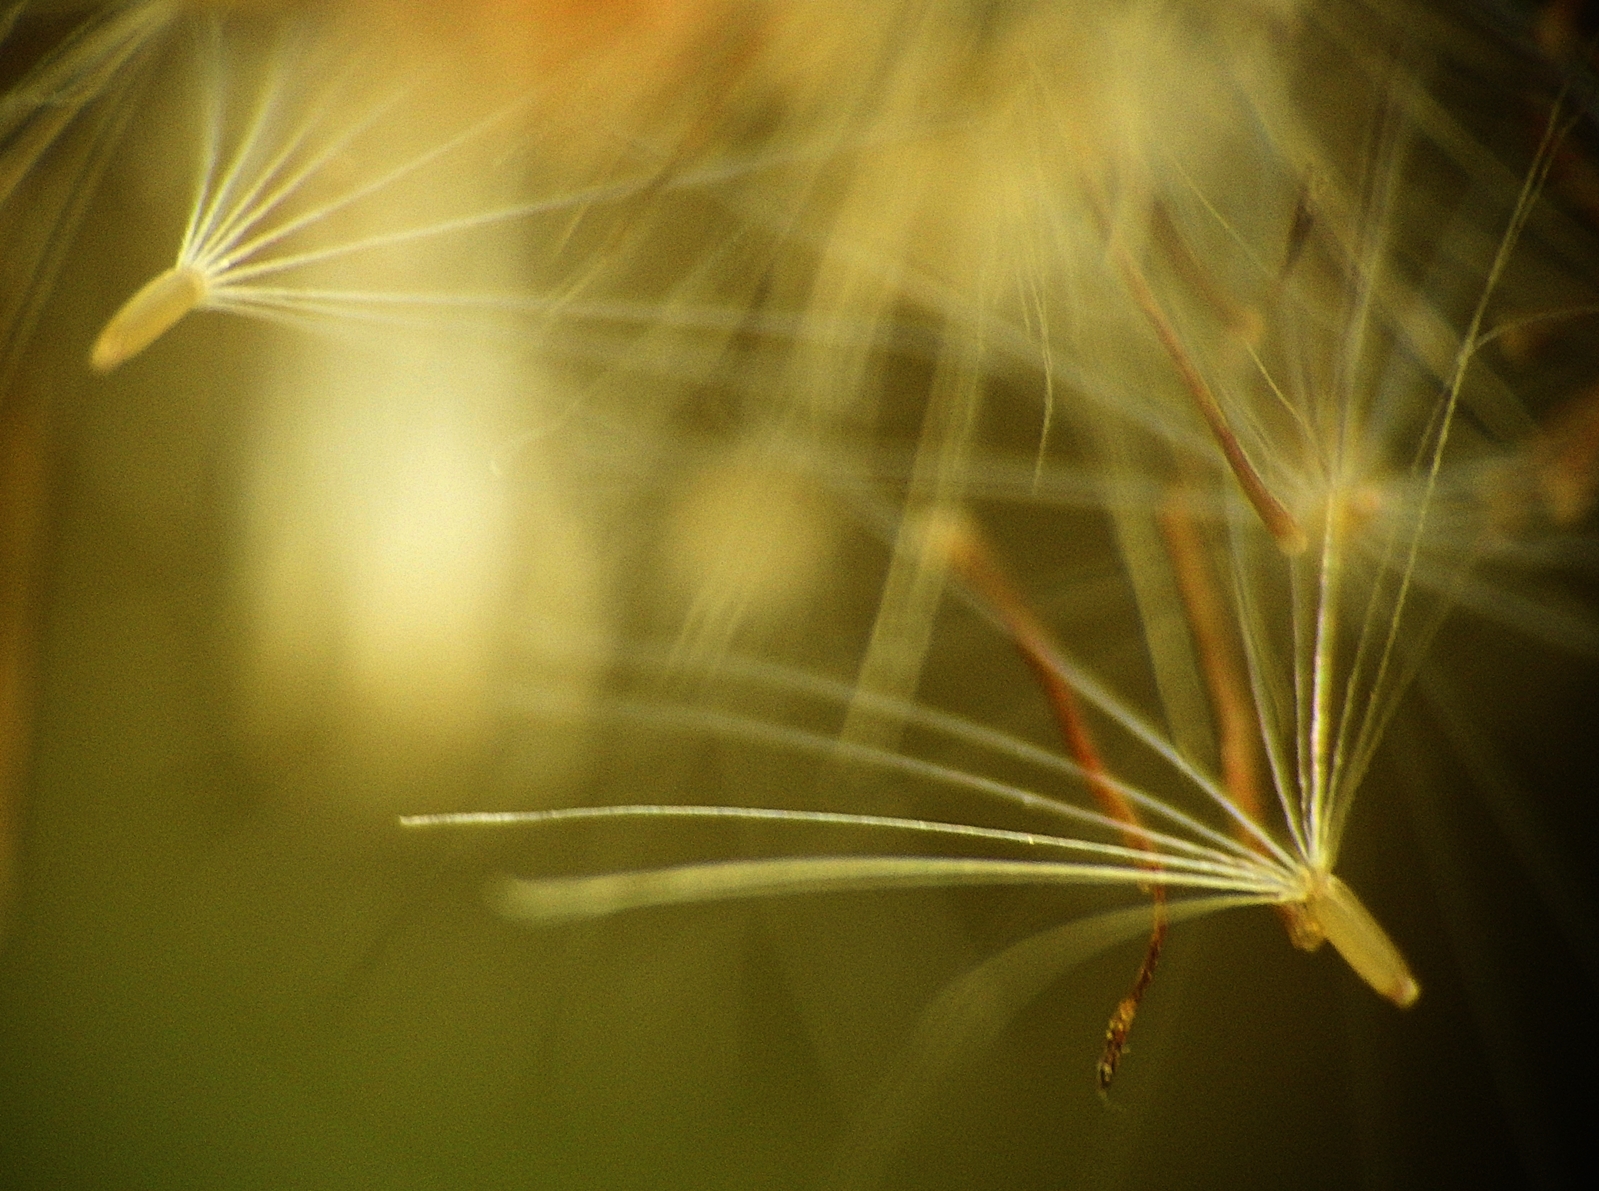 Dandelion seeds photo by Miriam Posz